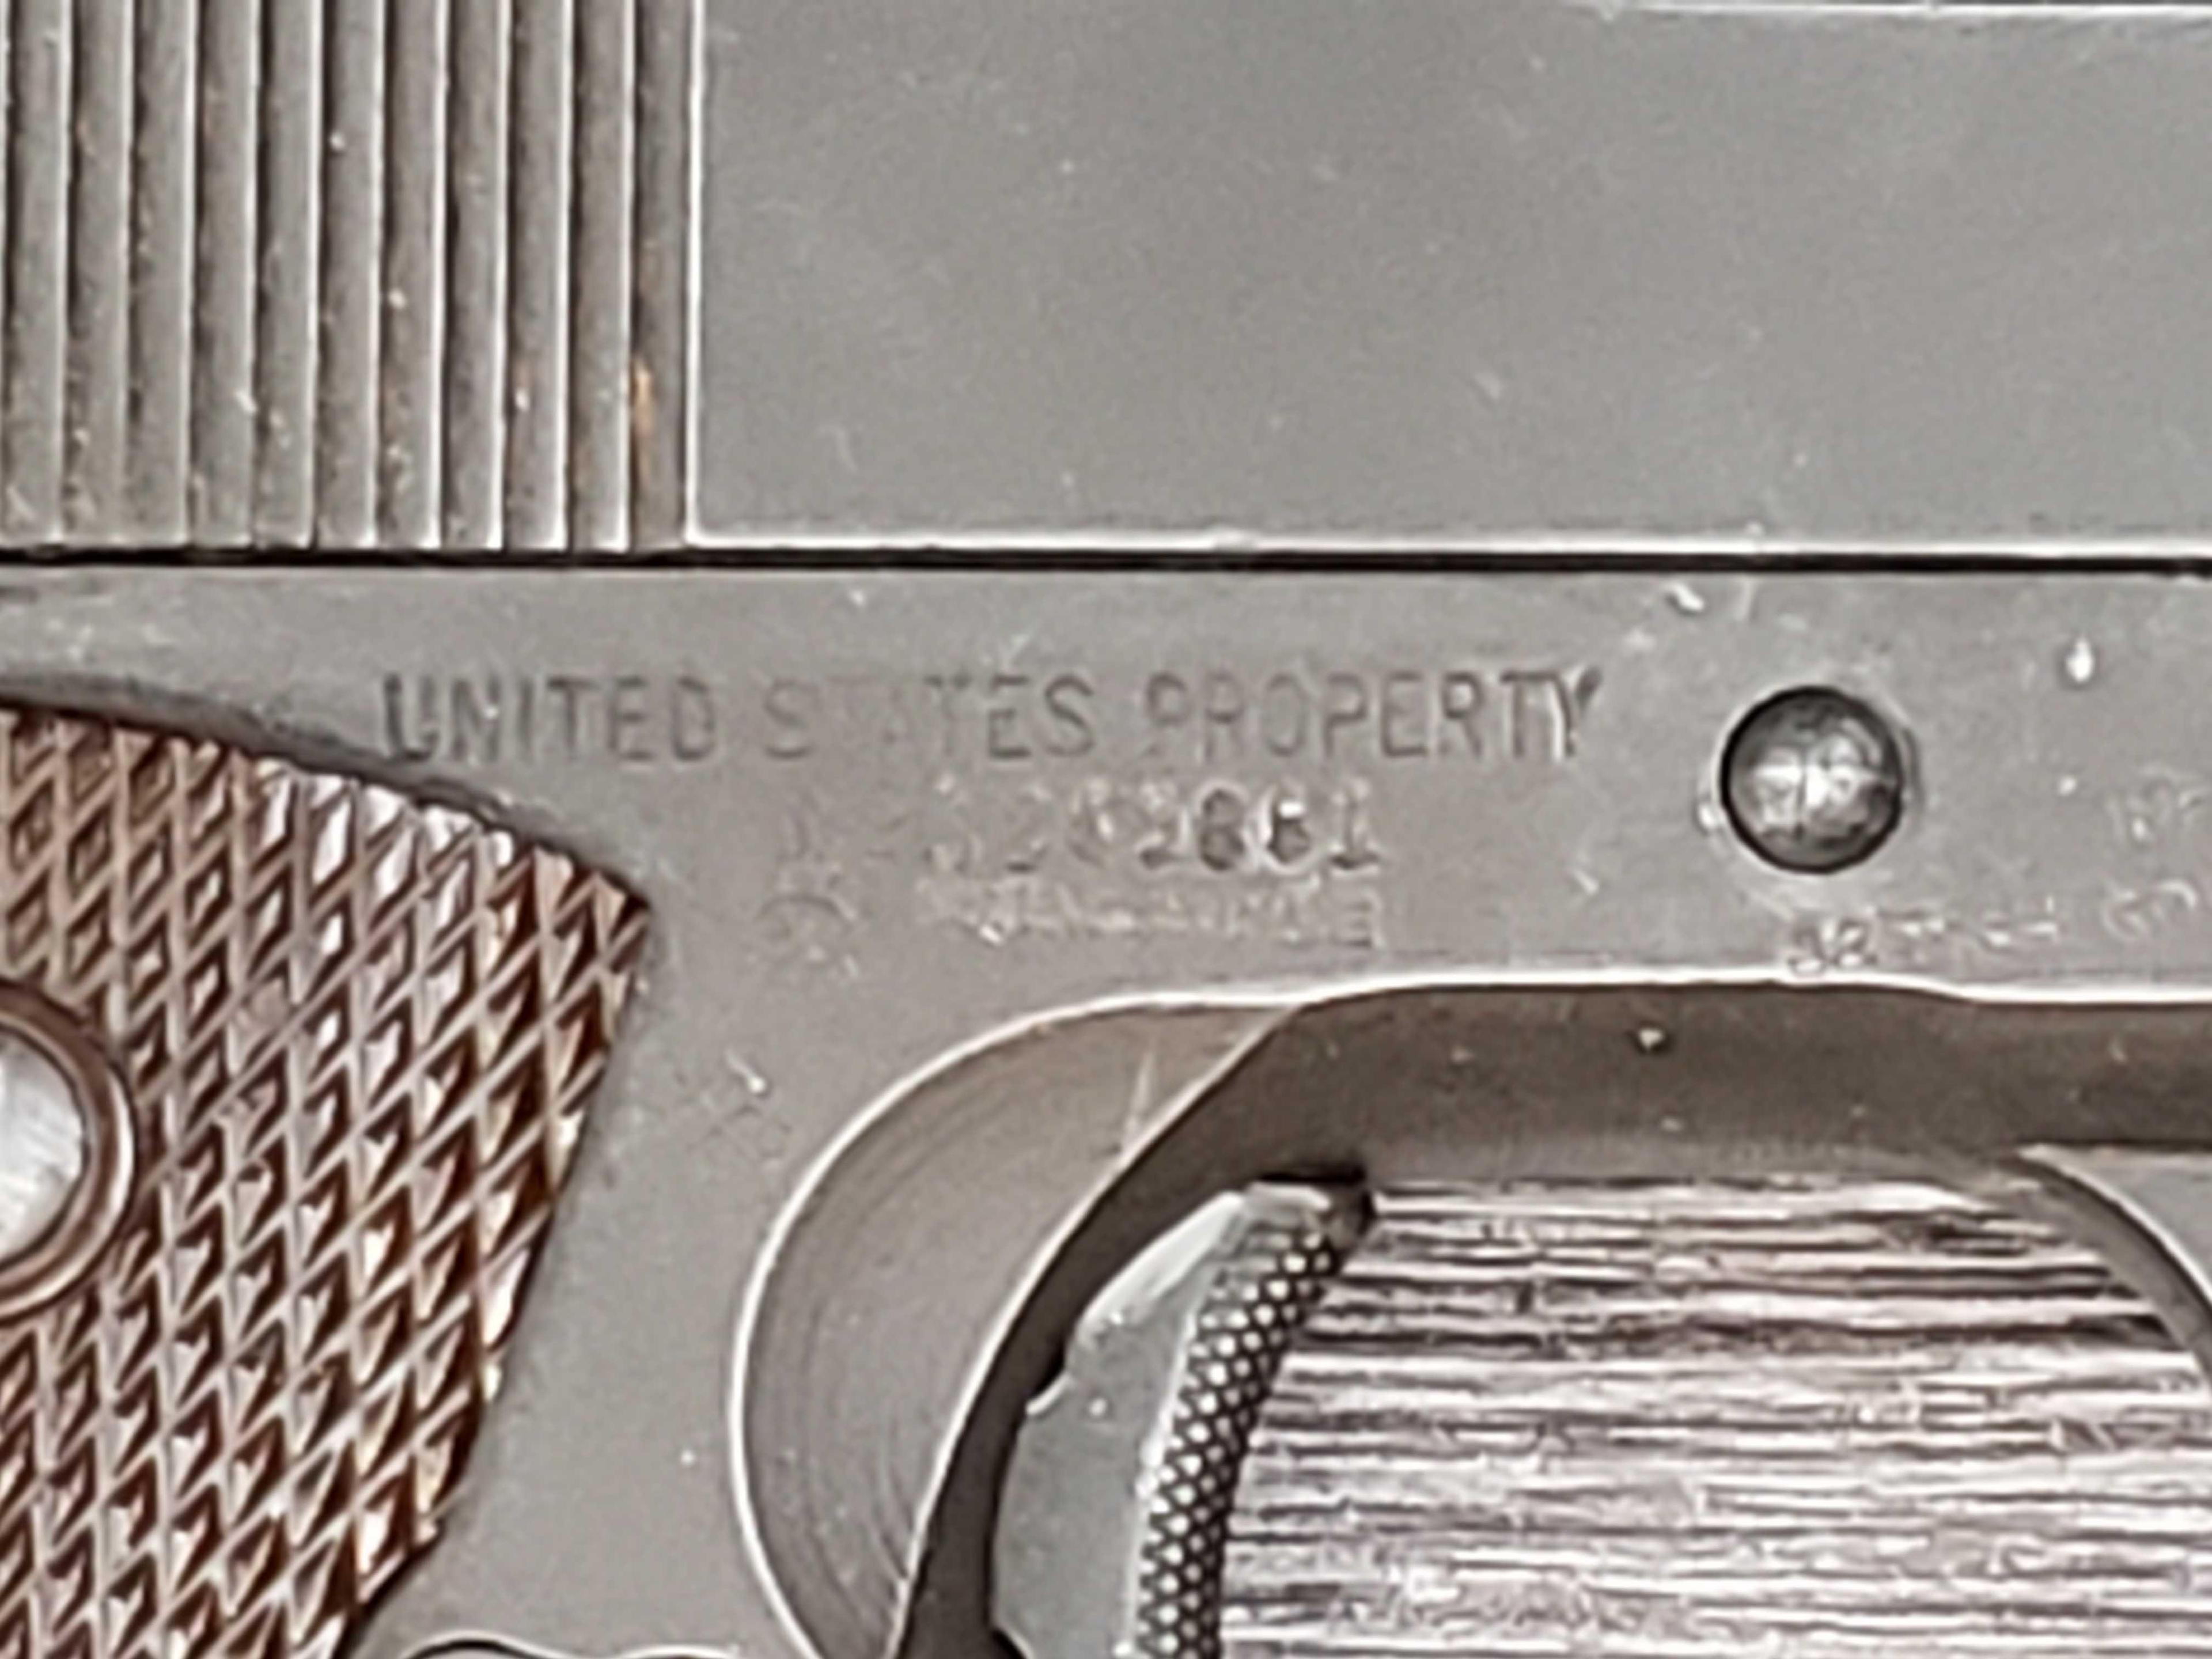 ITHACA M1911A1 U.S. PROPERTY MARKED .45 SEMI AUTO PISTOL